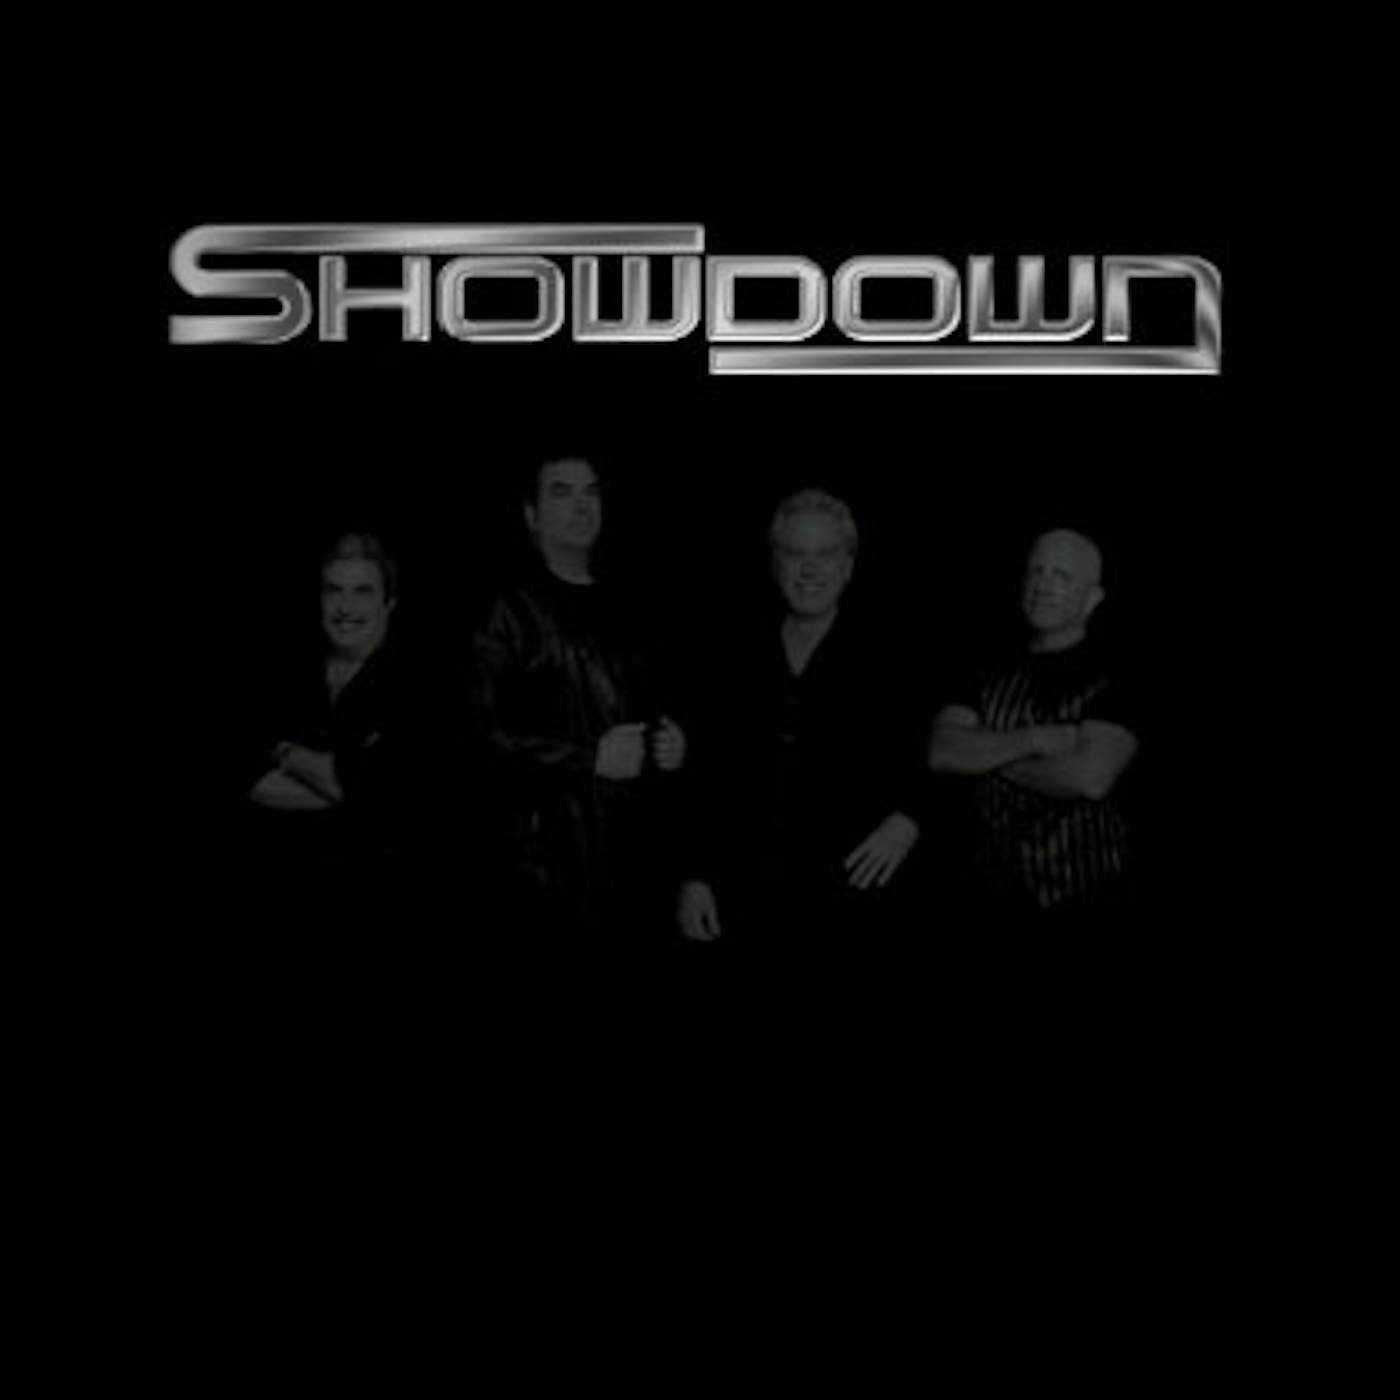 The Showdown 2012 CD